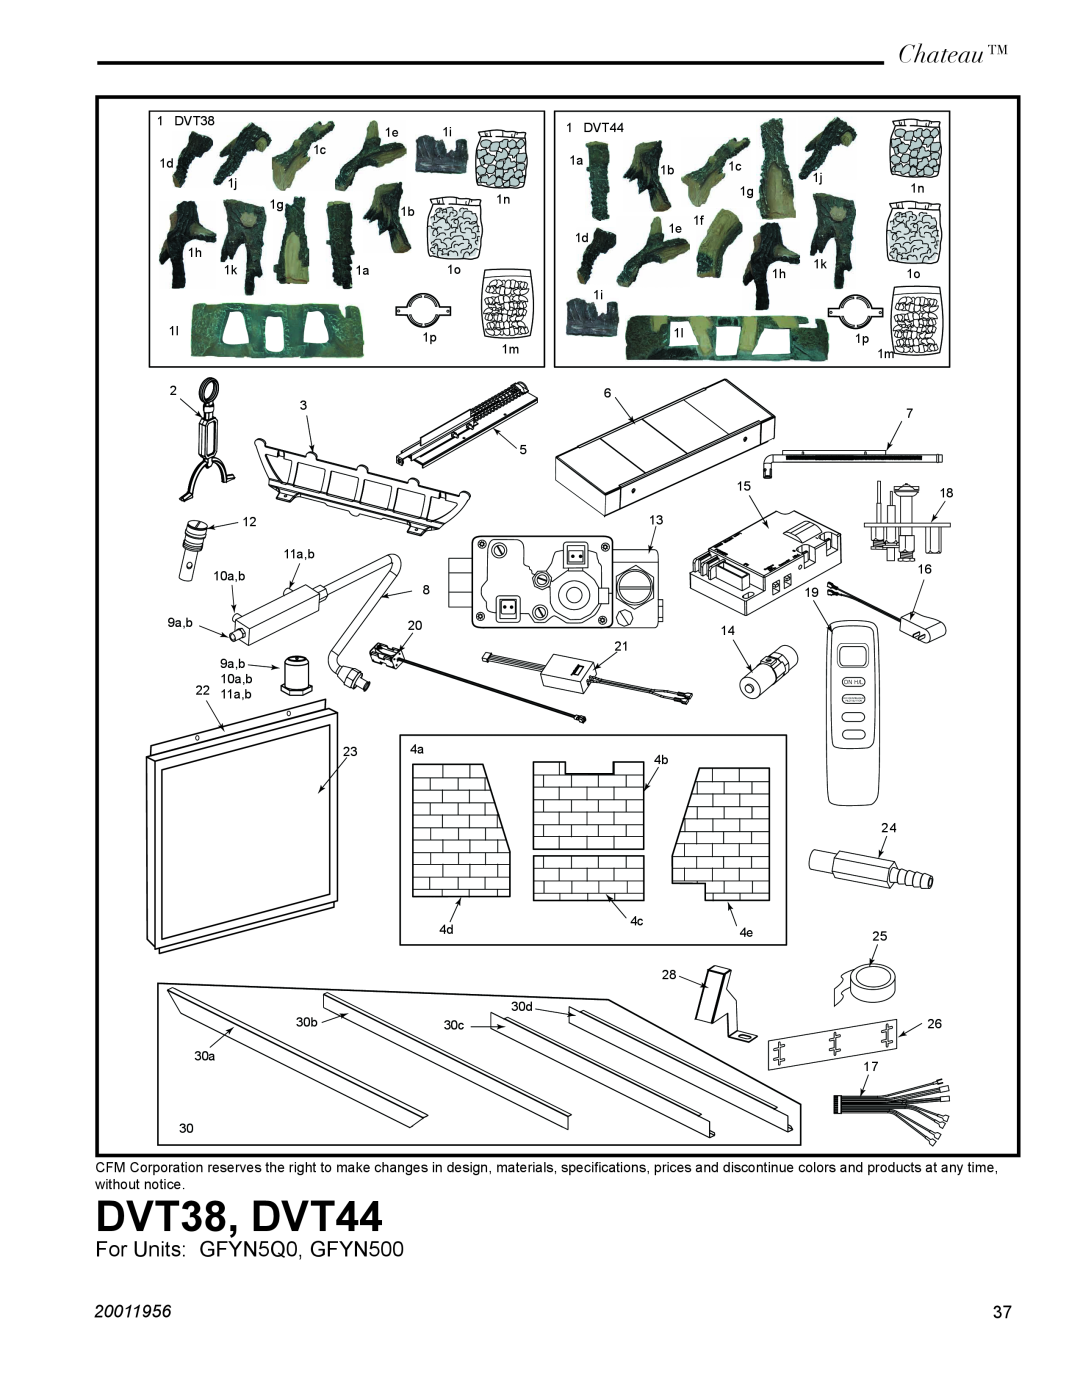 Vermont Casting installation instructions DVT38, DVT44, Chateau, For Units GFYN5Q0, GFYN500, 20011956 